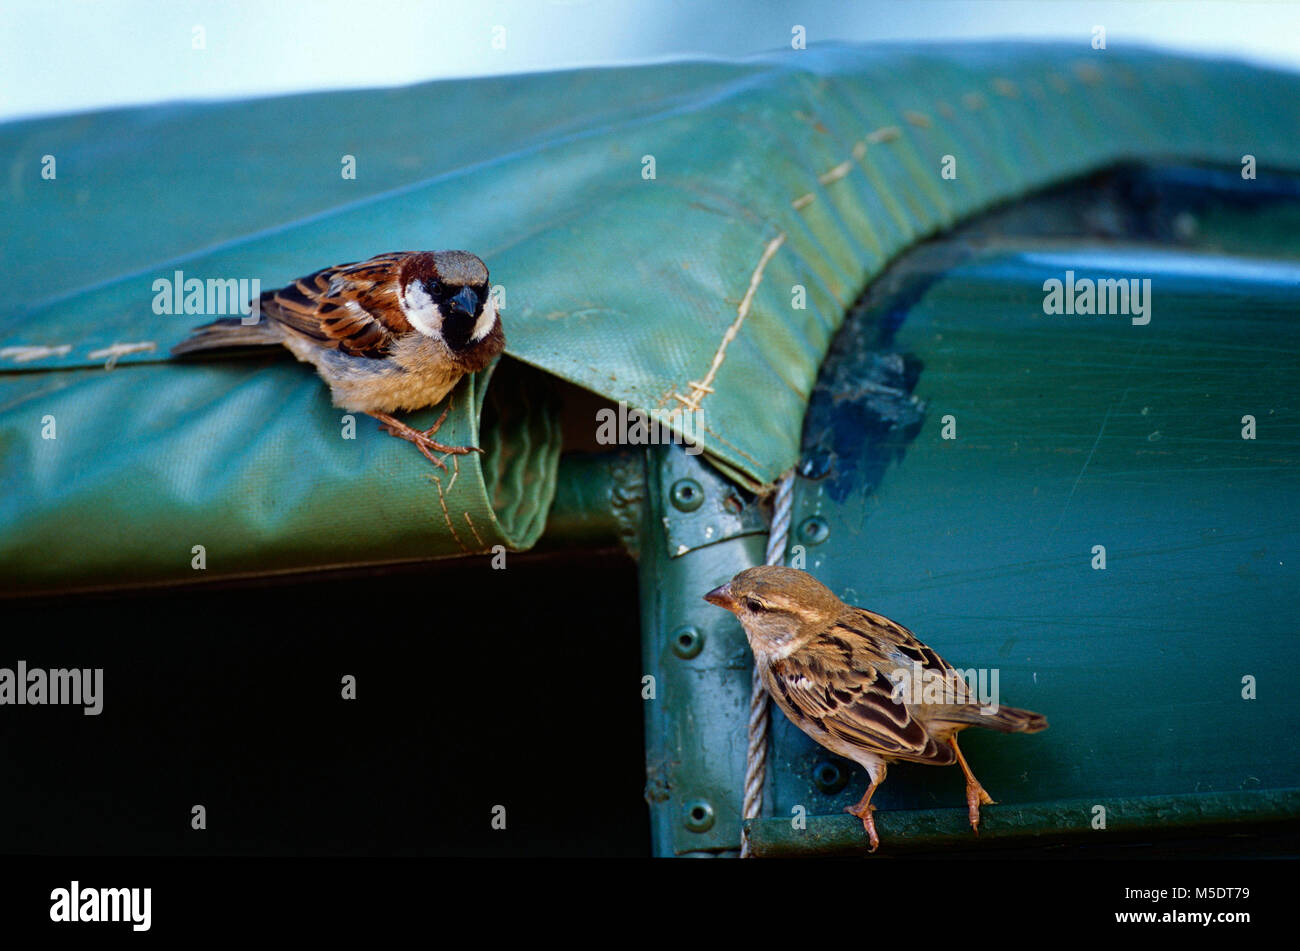 House Sparrow, Passer domesticus, Passeridae, Sparrow, male, female, couple, bird, animal, on car, Yala National Park, Sri Lanka Stock Photo